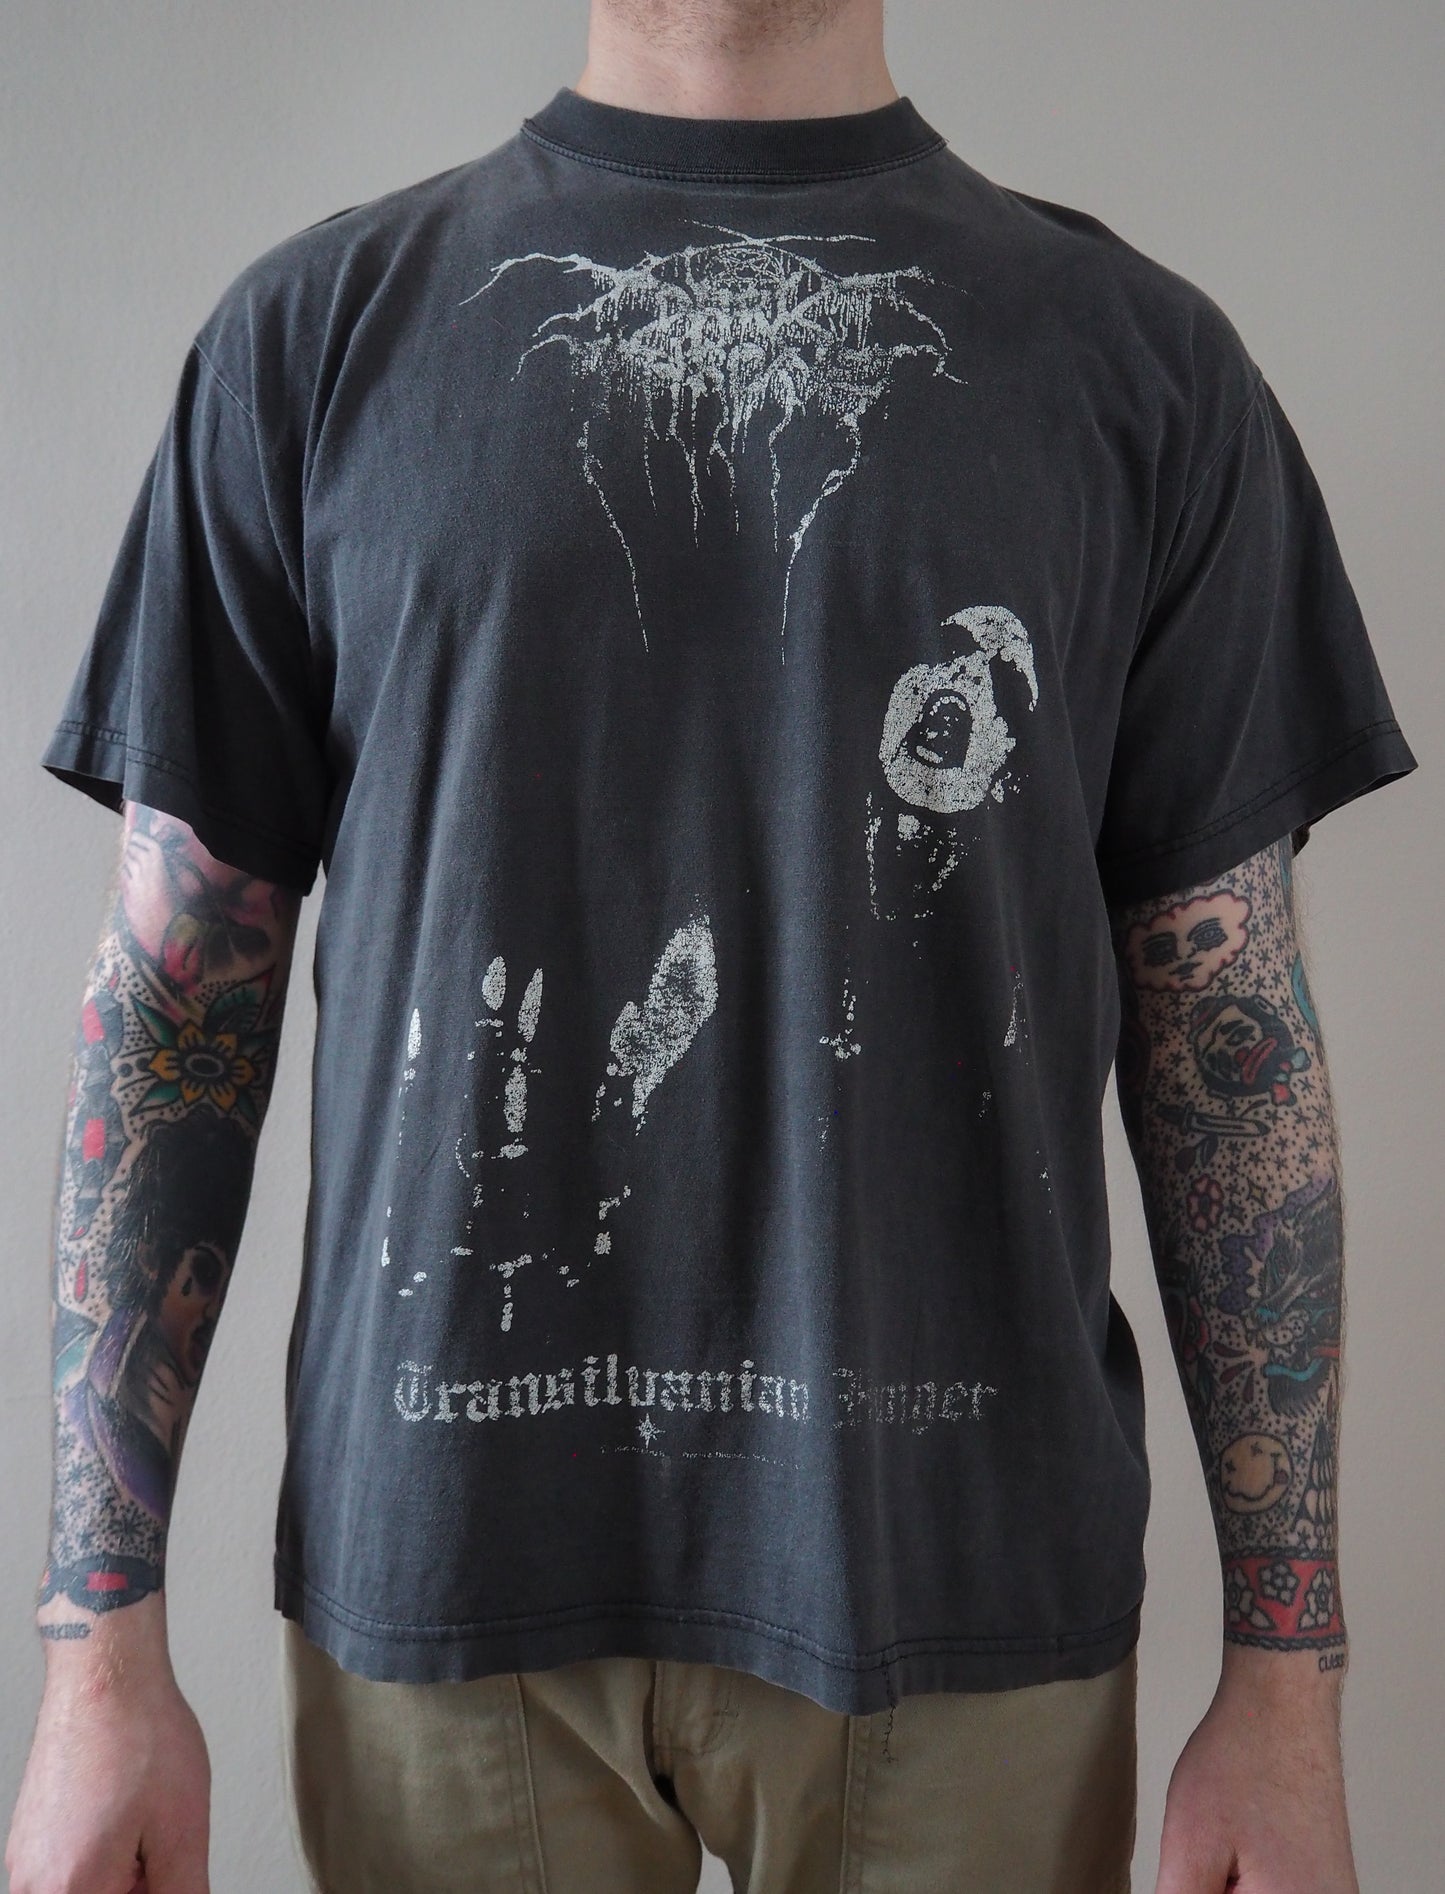 1994 Dark Throne "Transalvania Hunger"  t-shirt